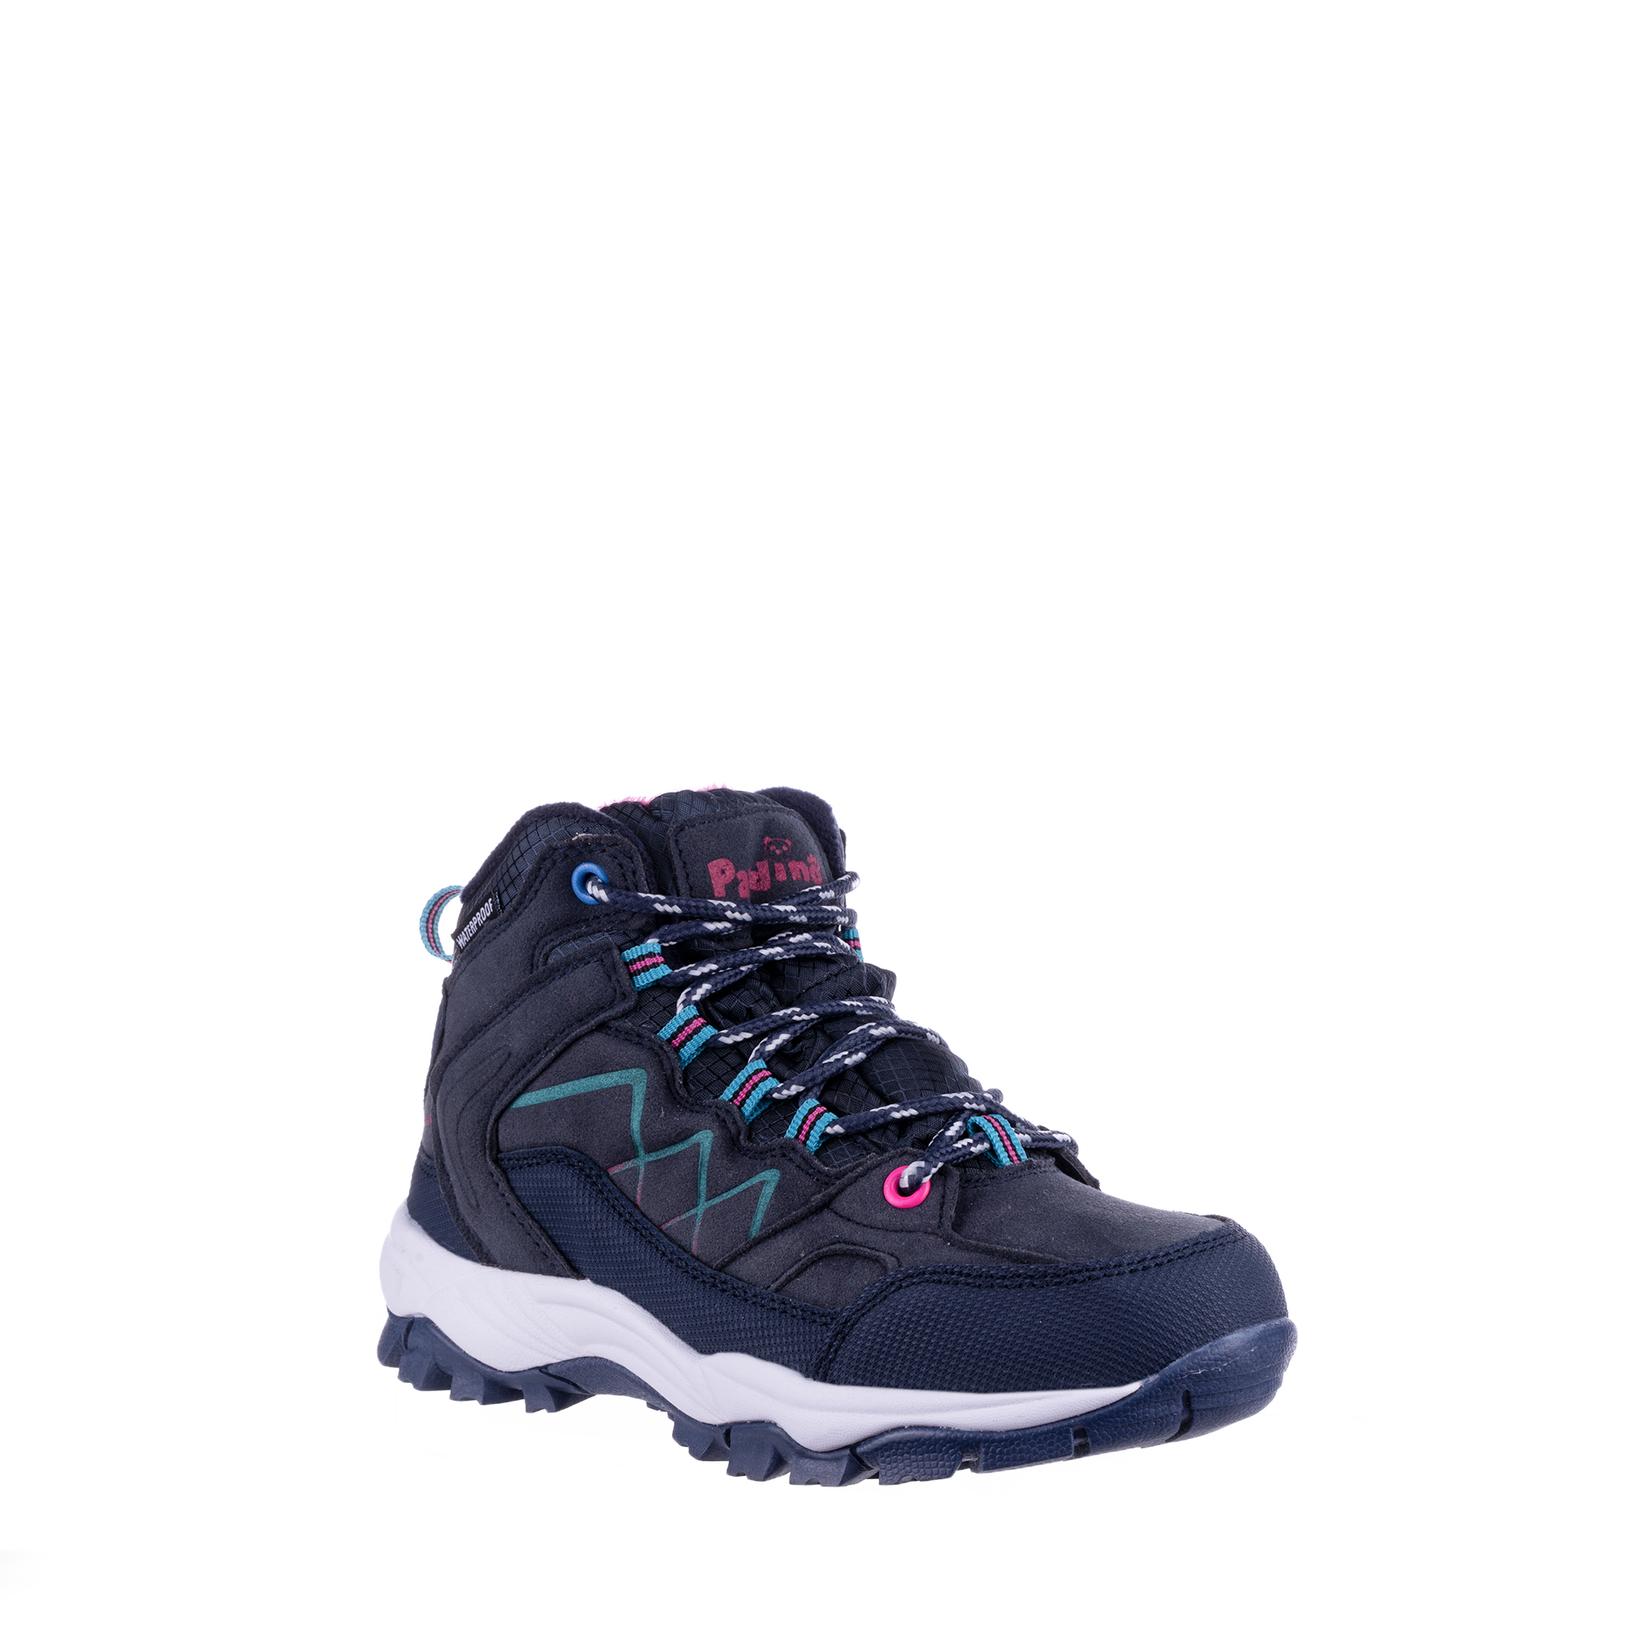 Selected image for PANDINO GIRL WATERPROOF Cipele za devojčice N75398, Teget